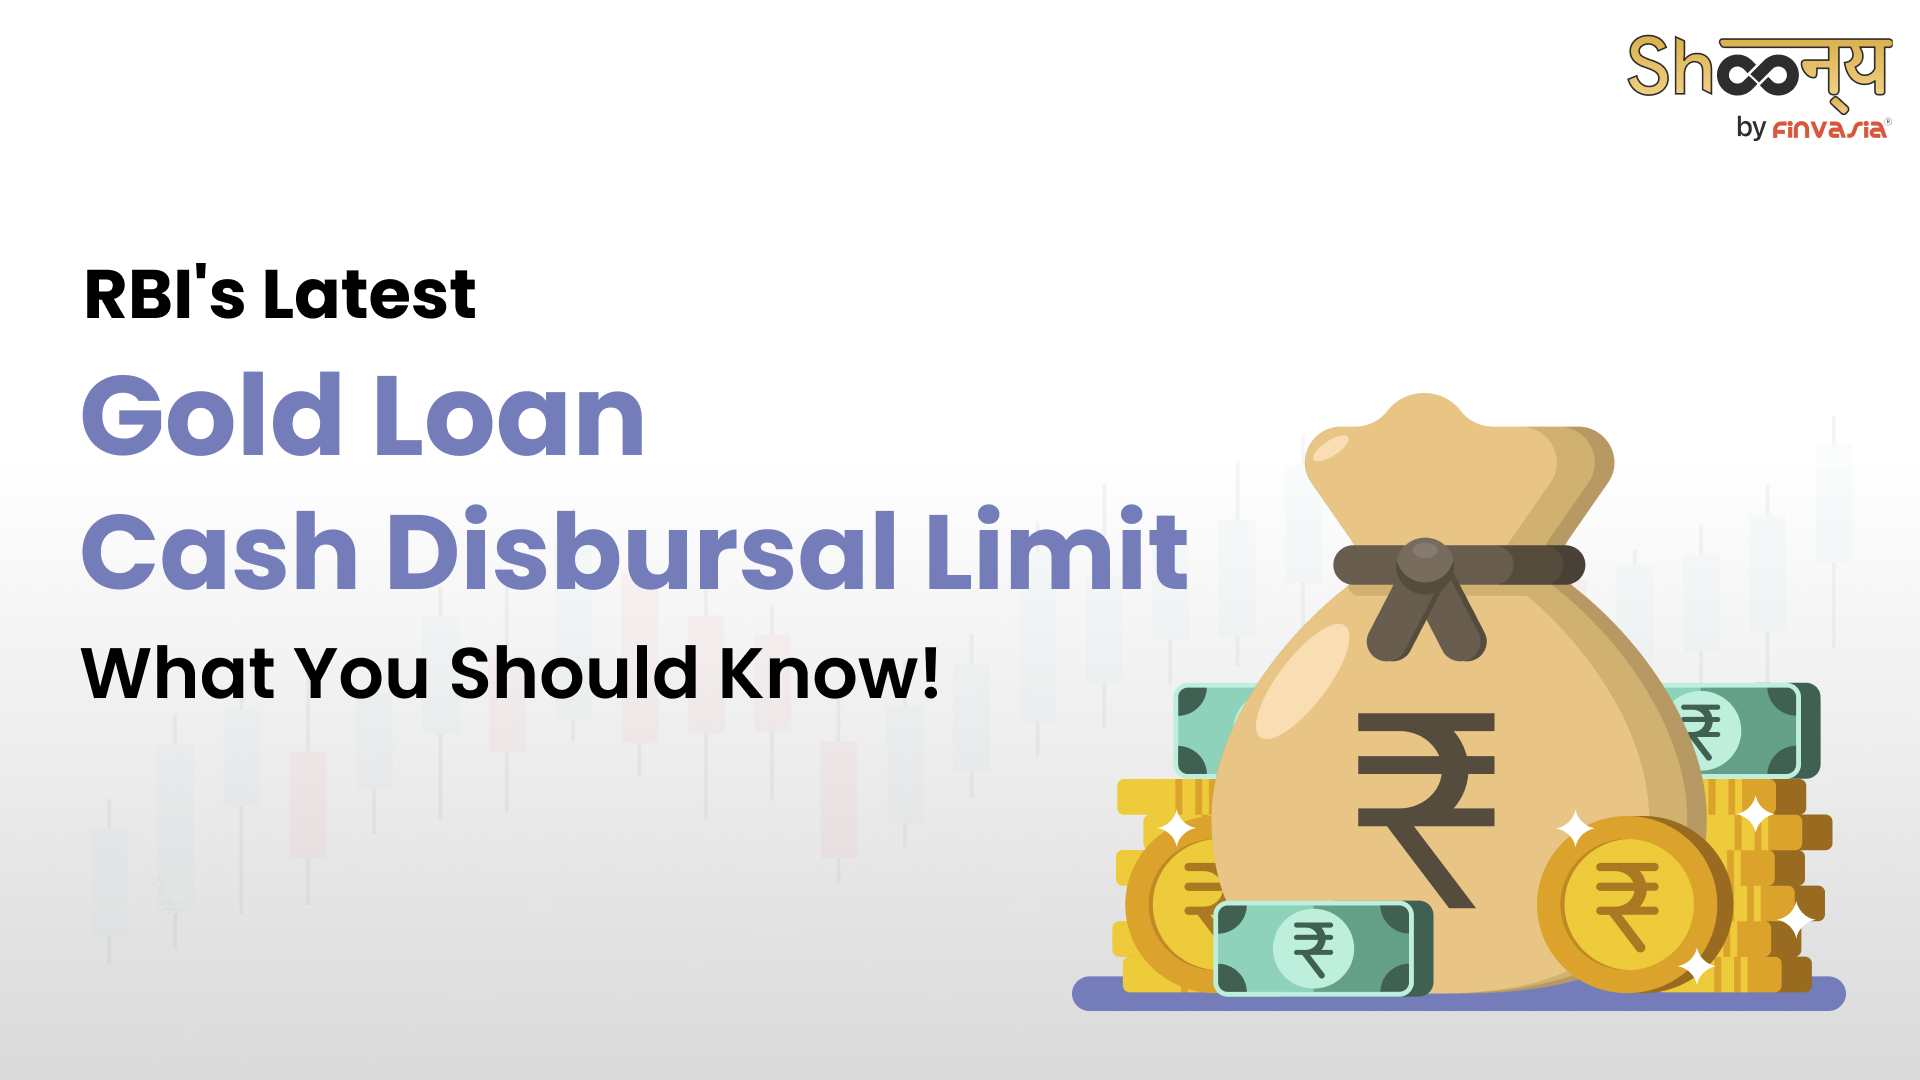 Understanding RBI's New Cash Disbursal Limit For Gold Loans